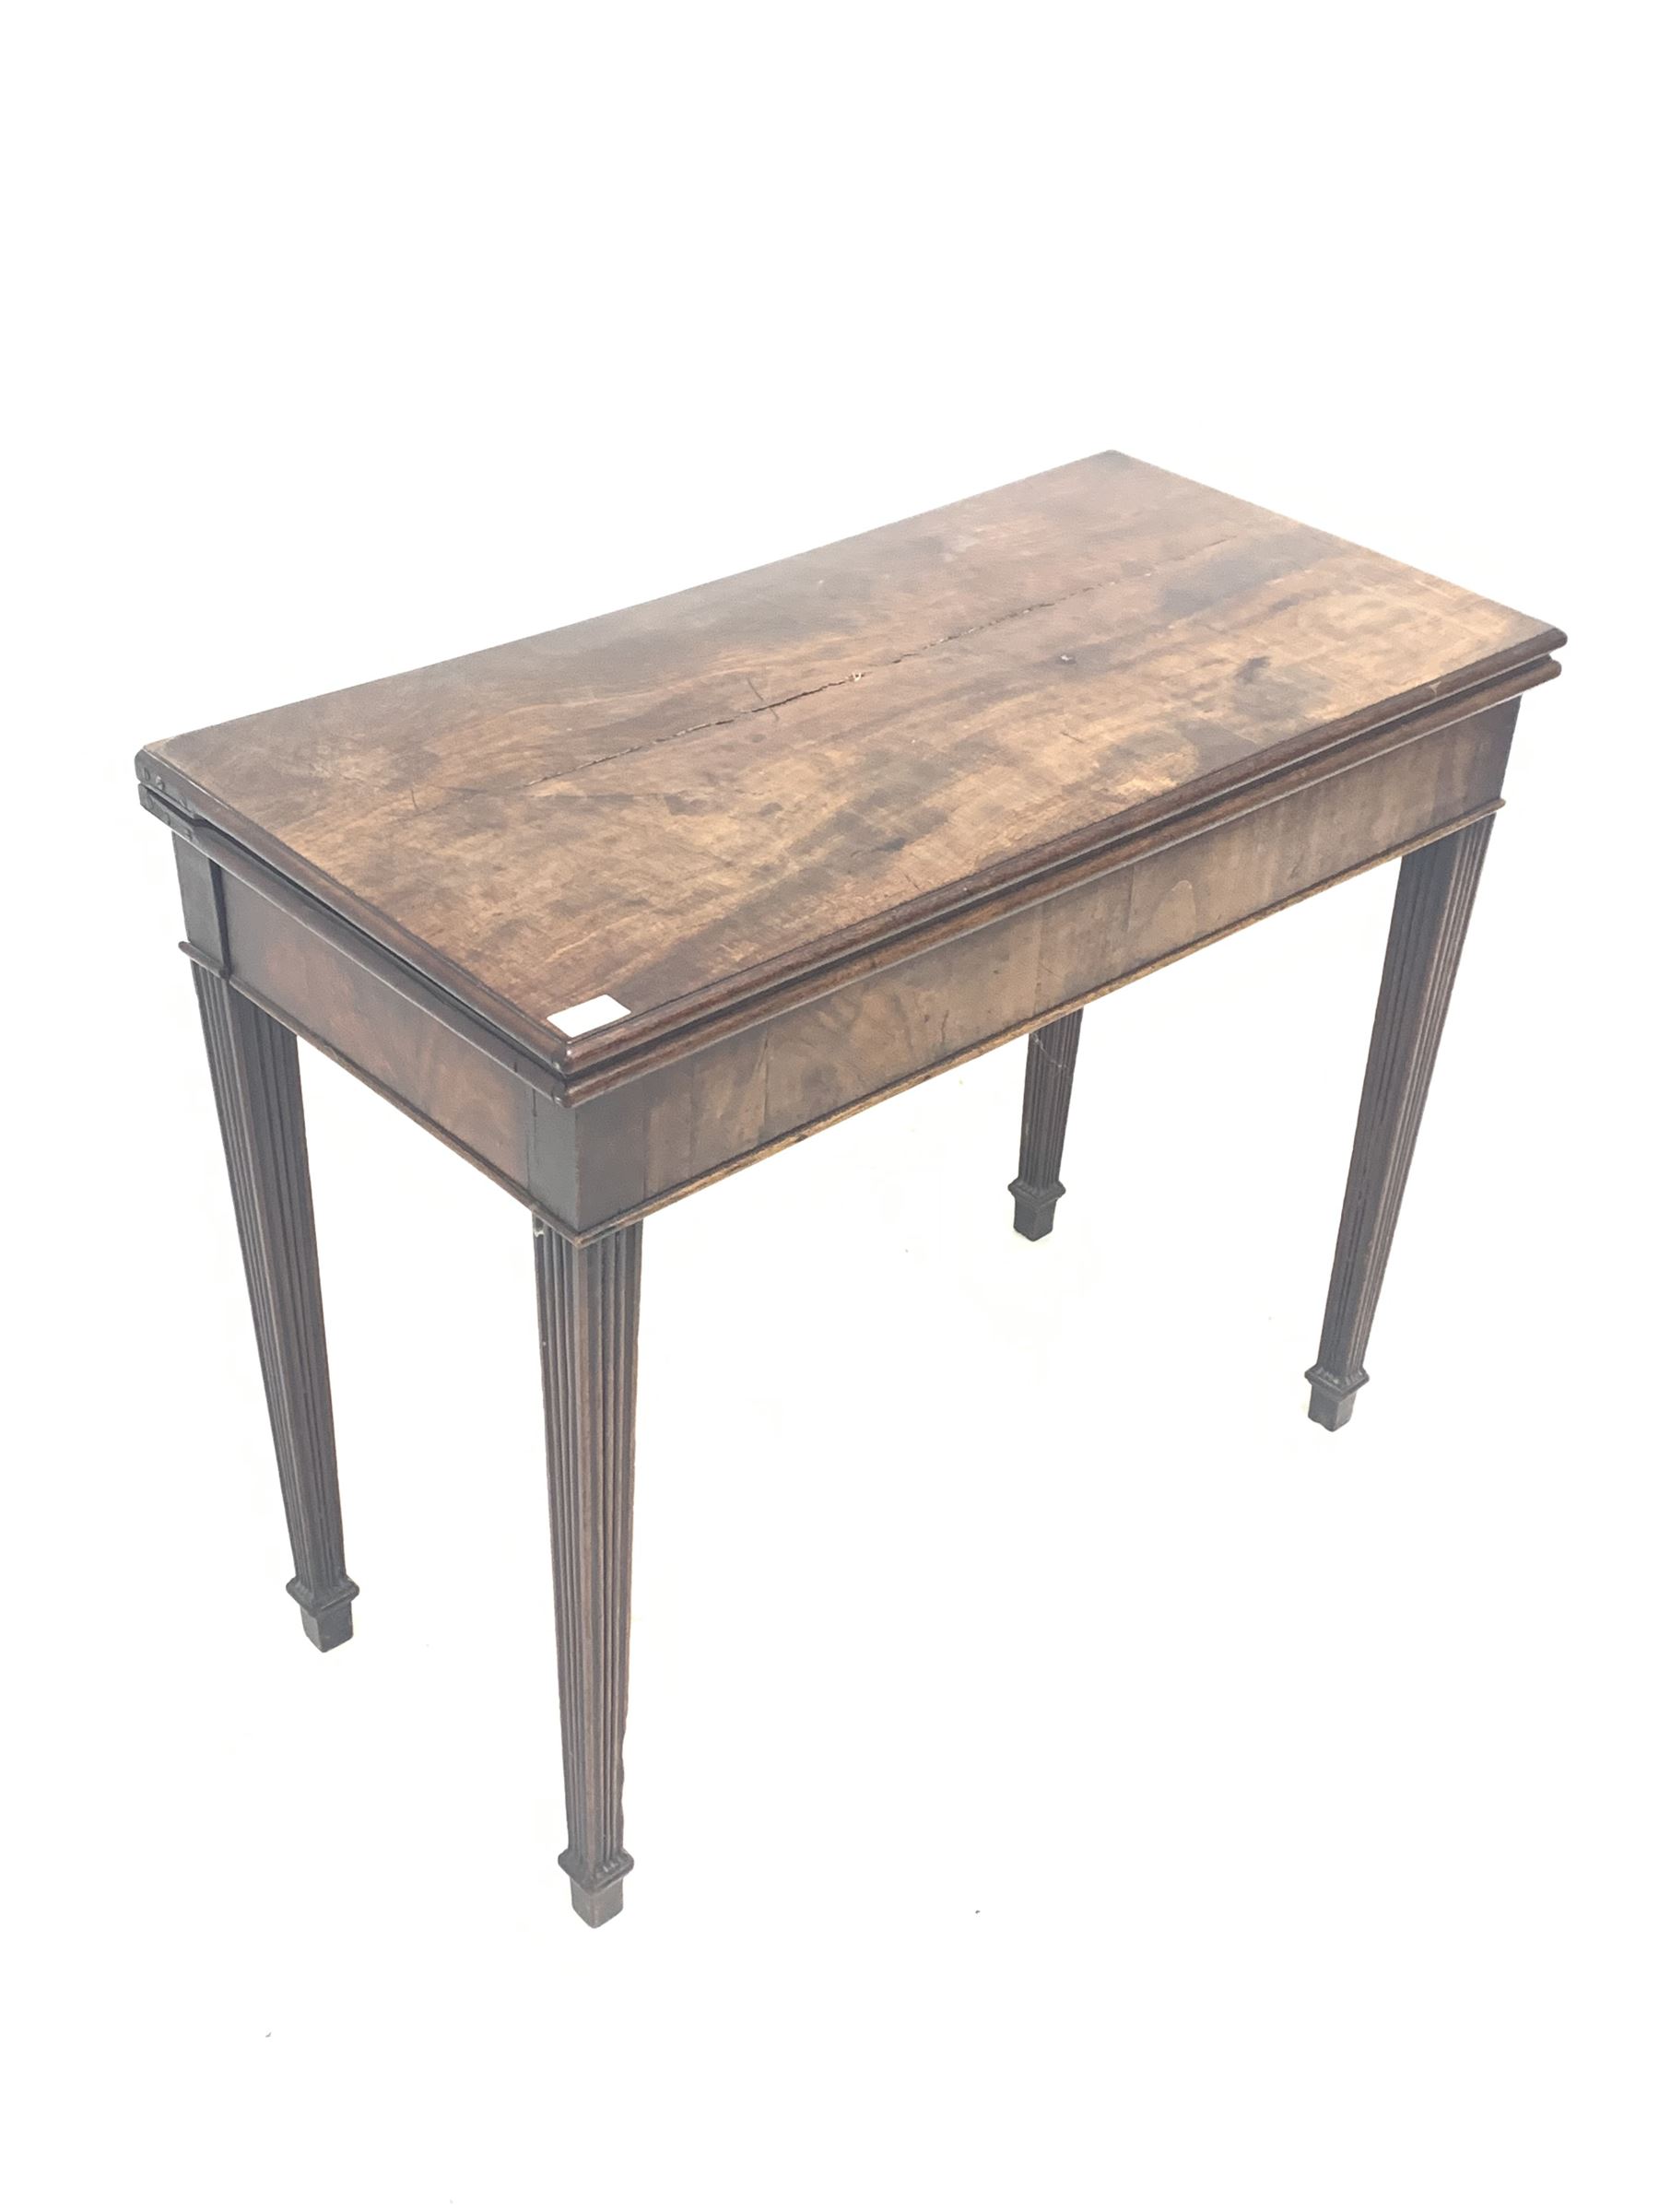 Mid 19th century Gillows design figured mahogany fold over tea table - Image 2 of 6